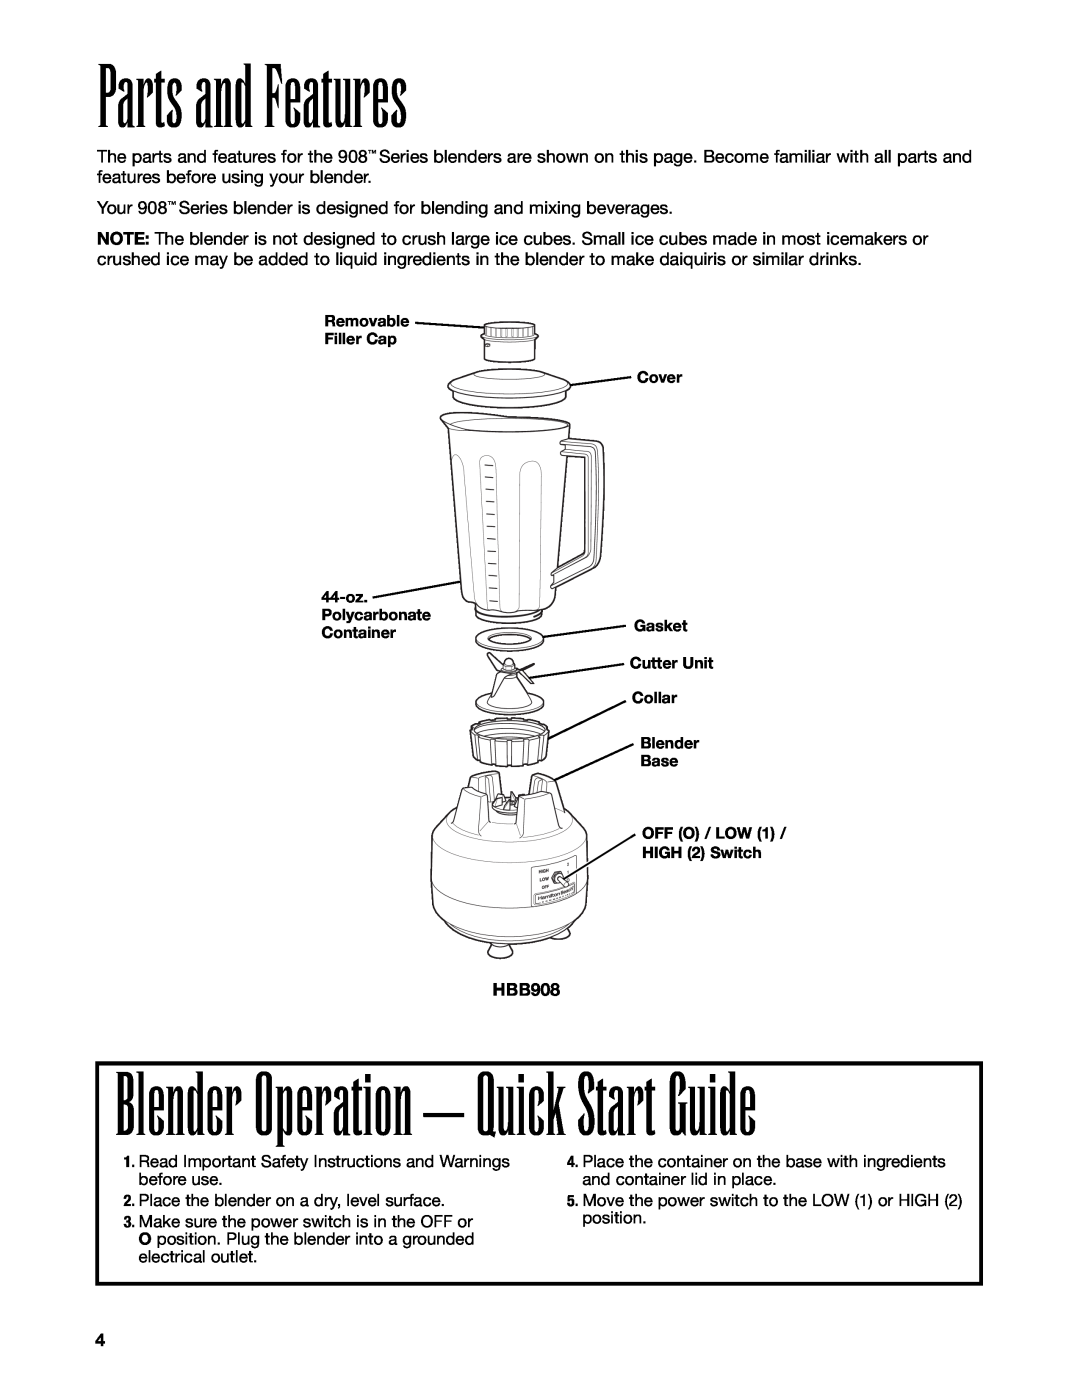 Hamilton Beach HBB908 manuel dutilisation Parts and Features, Blender Operation - Quick Start Guide 